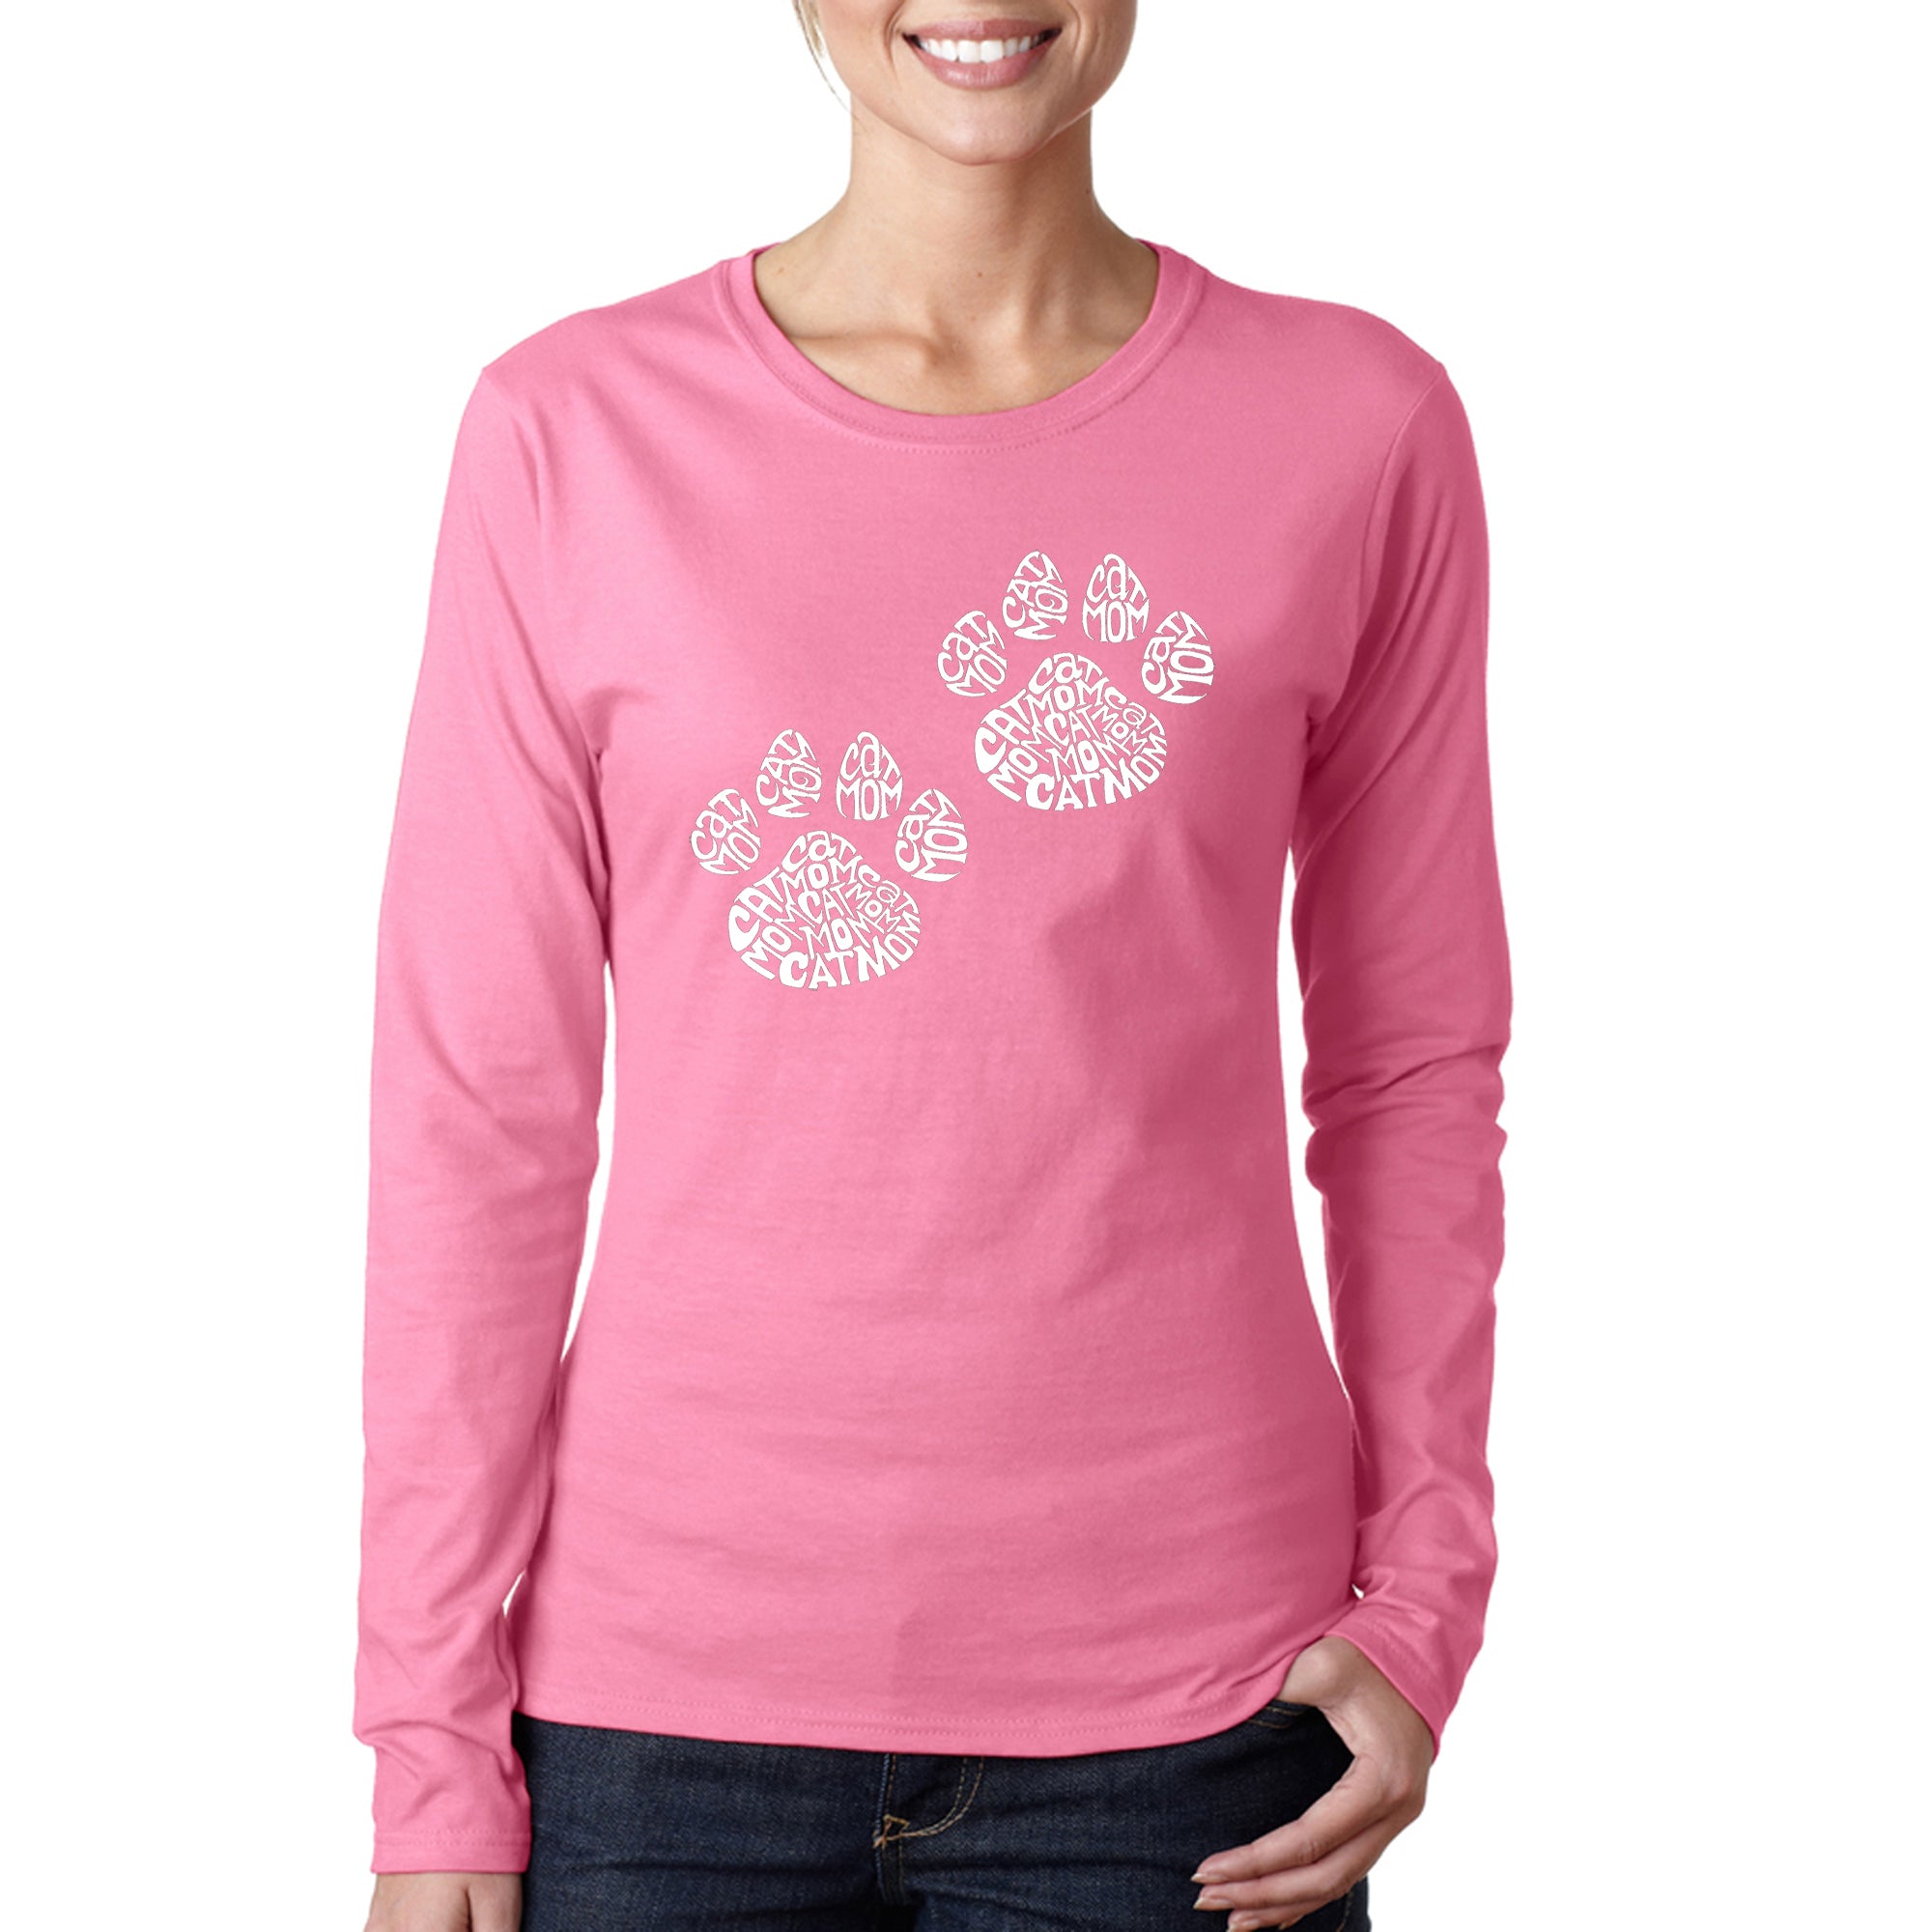 Cat Mom - Women's Word Art Long Sleeve T-Shirt - Pink - Medium